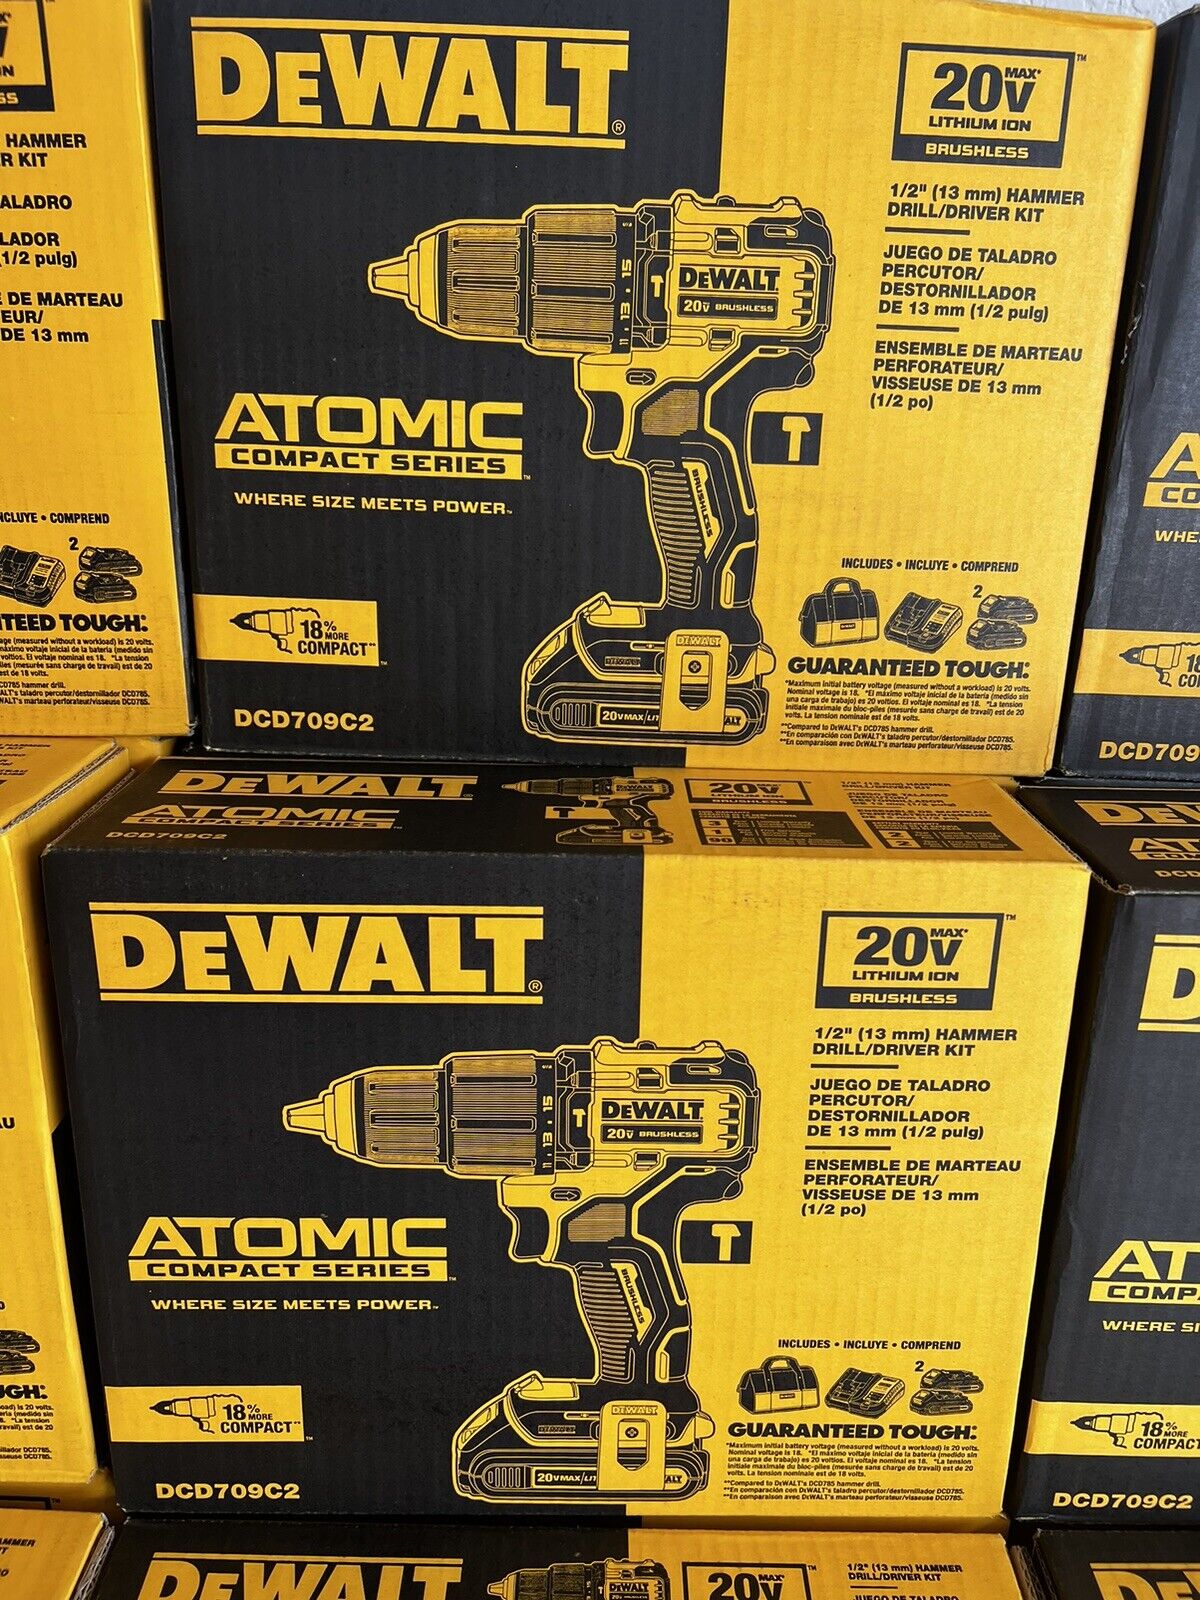 DEWALT+DCD709C2+20V+Cordless+Hammer+Drill for sale online eBay